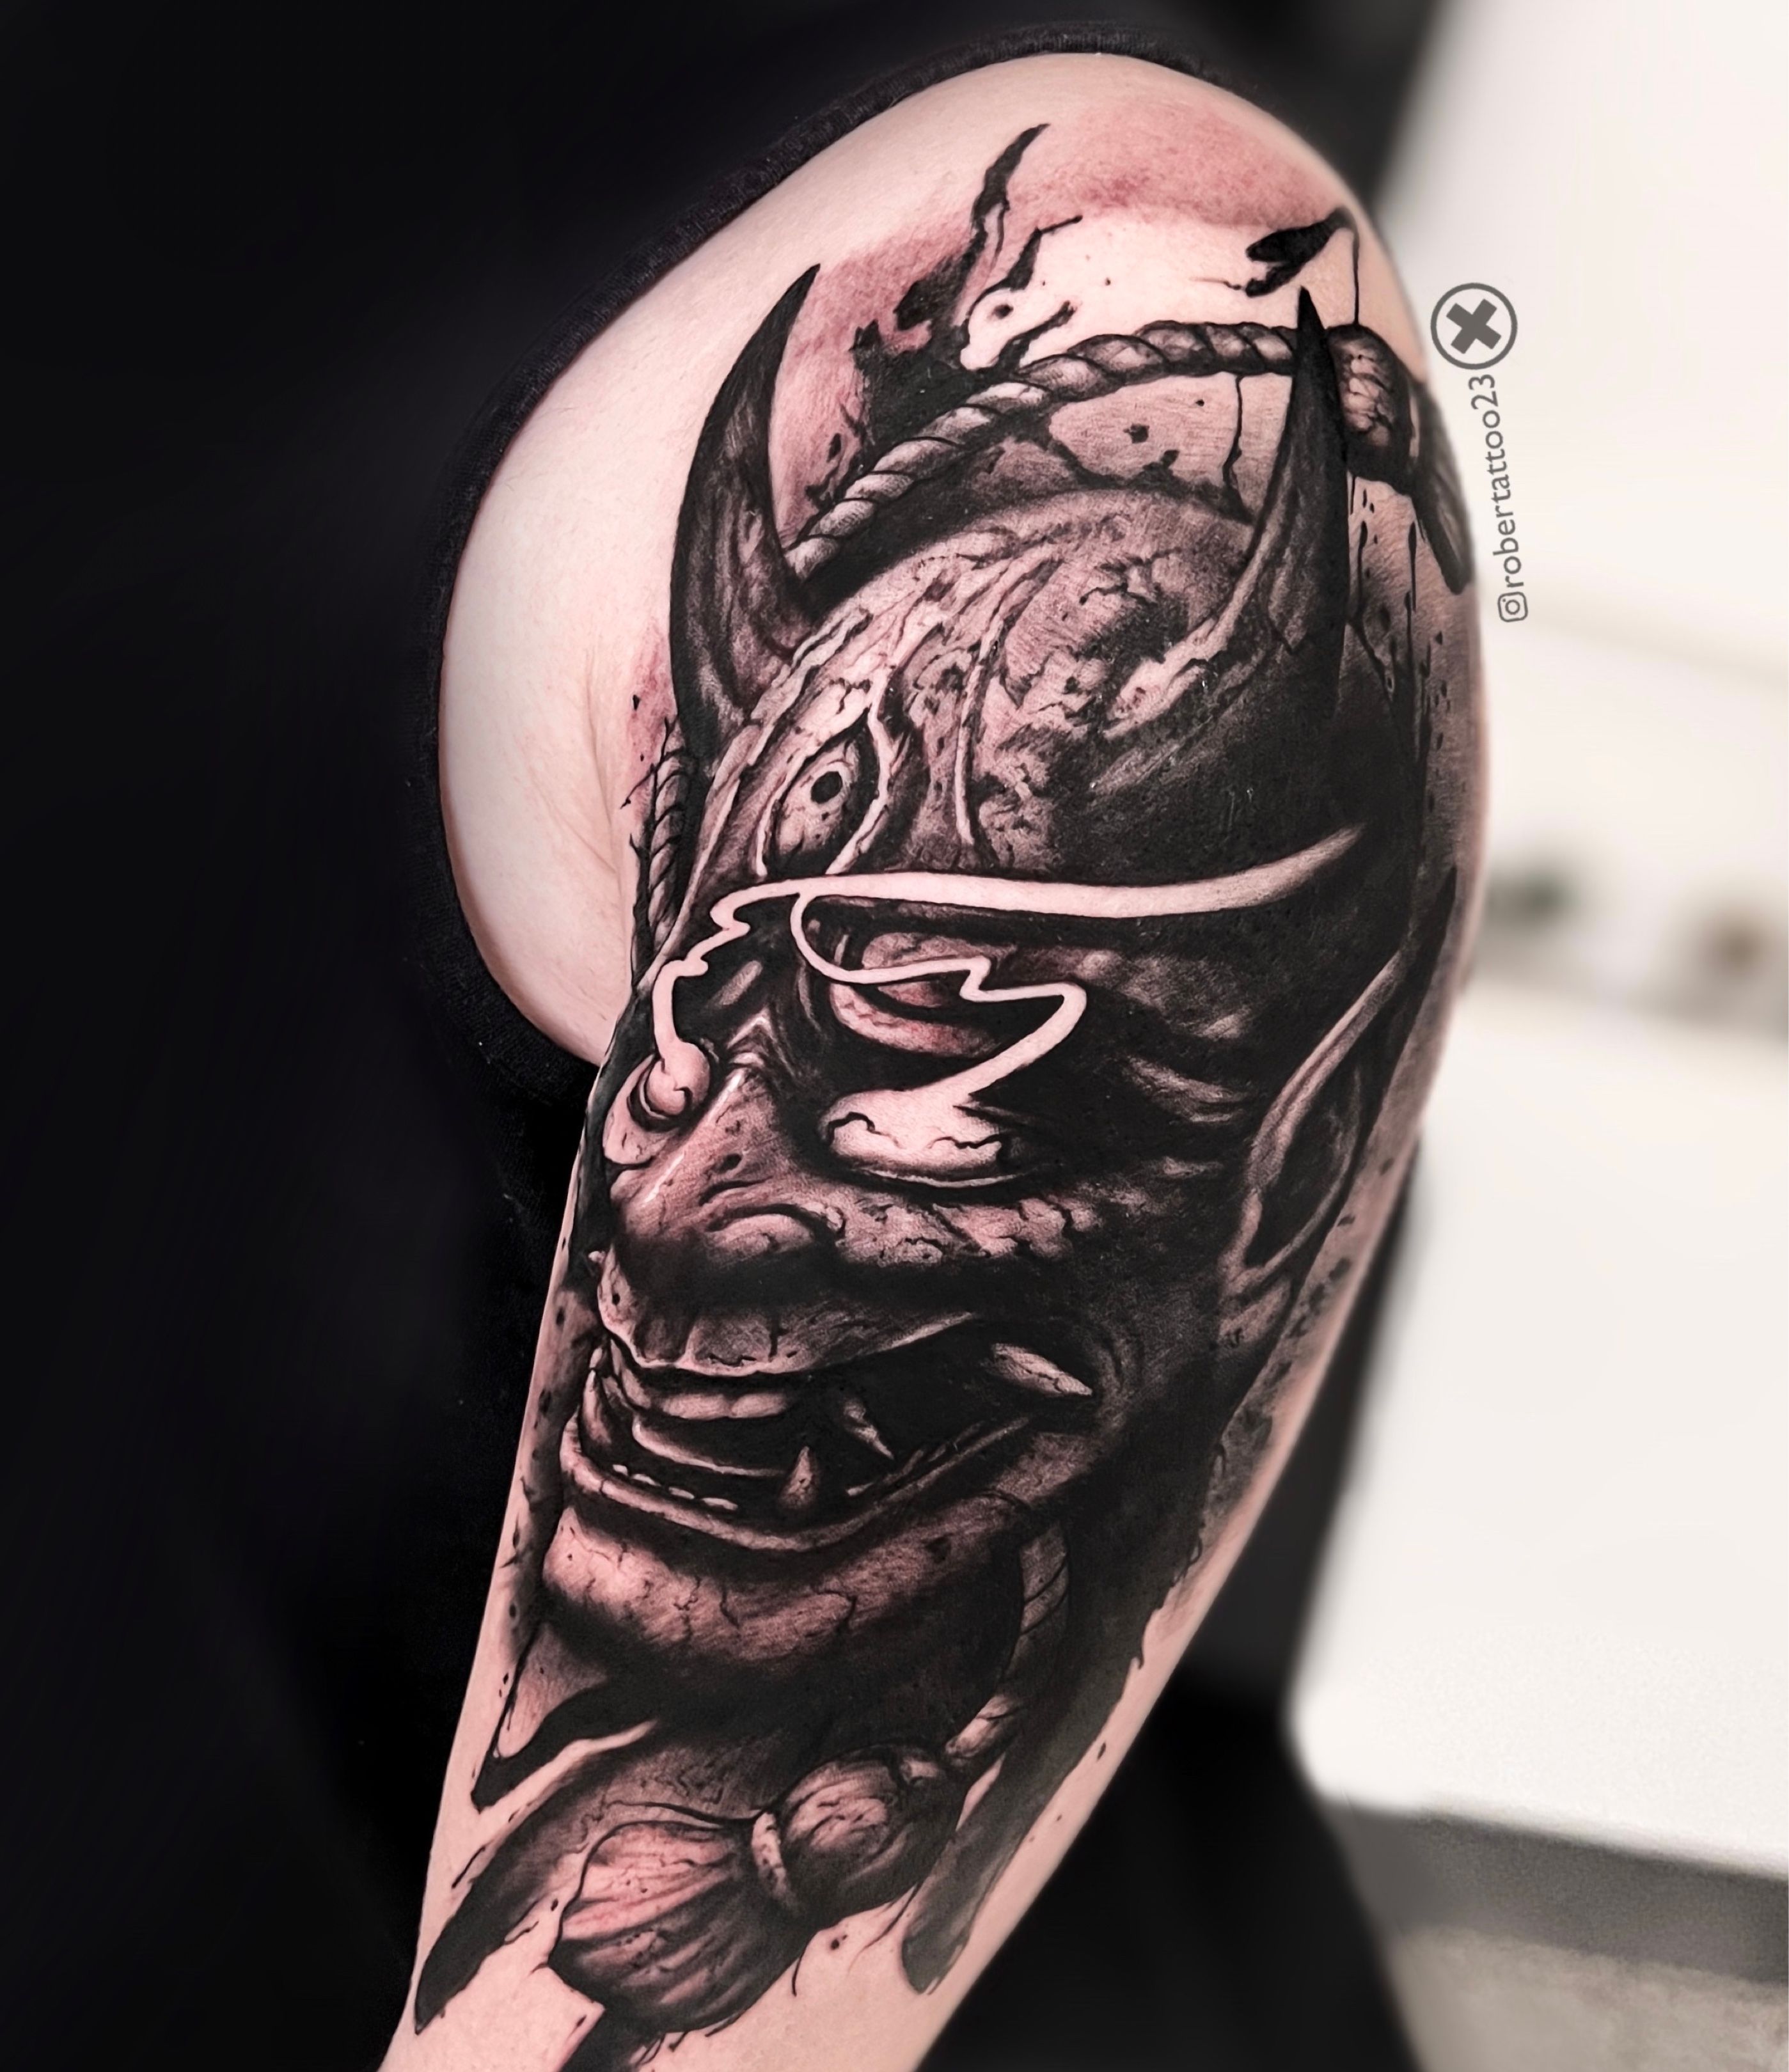 Tattoo uploaded by Blacksmith.Tattoo • Gangsta mask LV